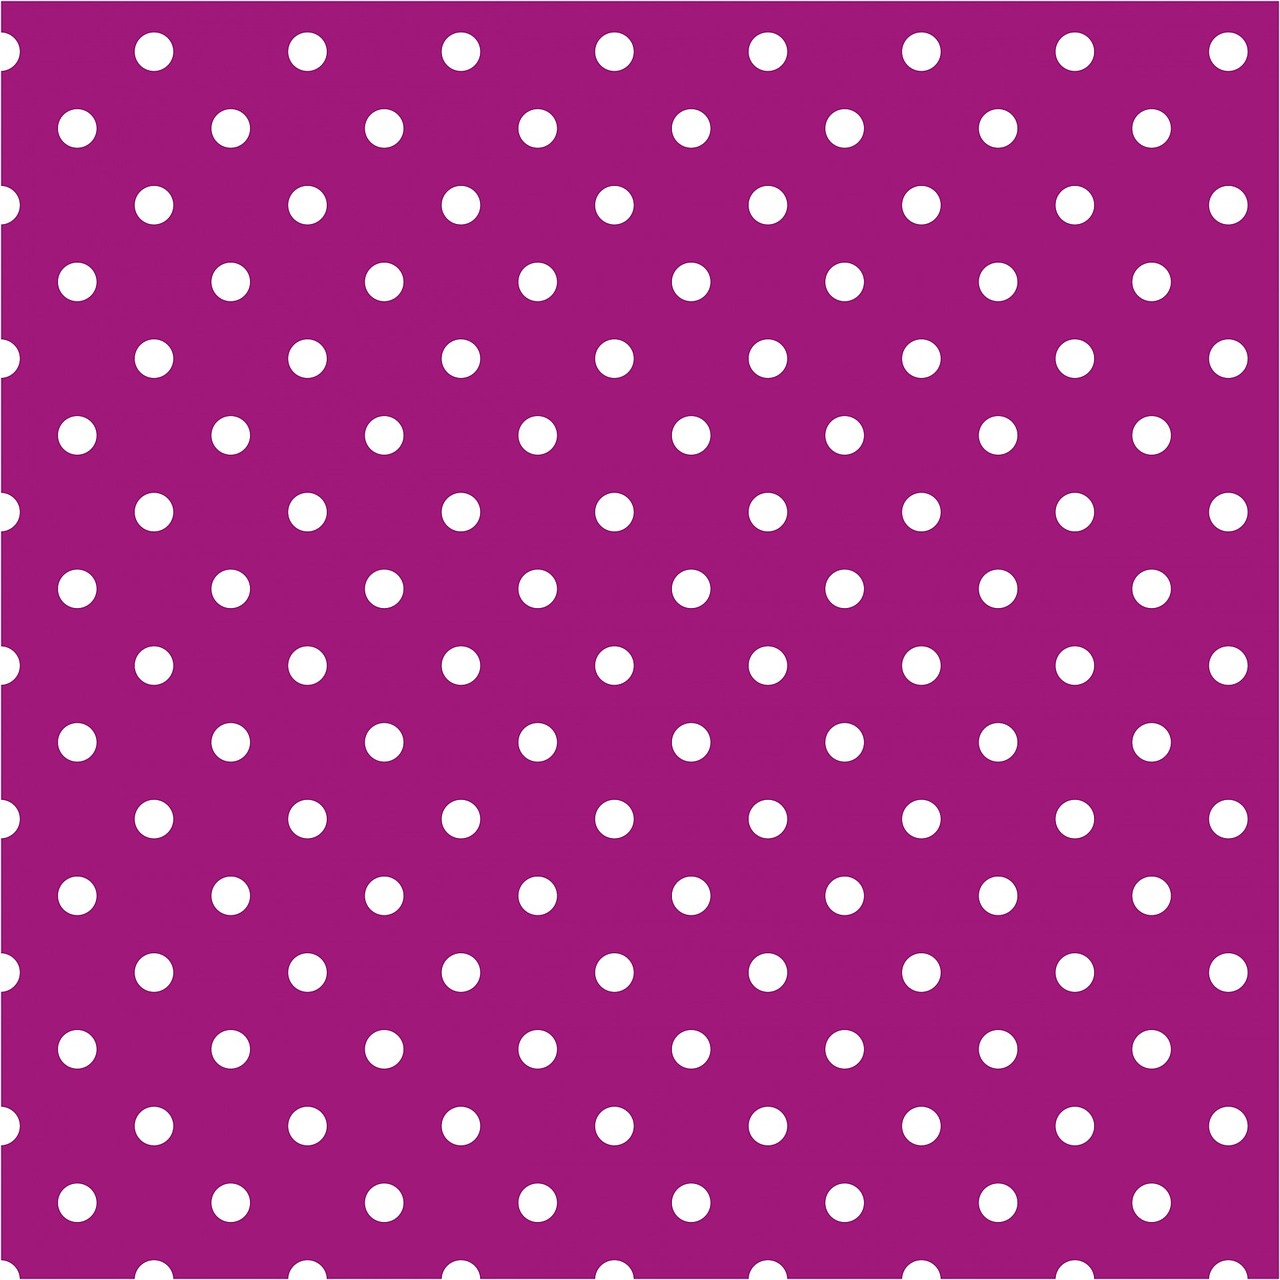 polka dots purple white free photo